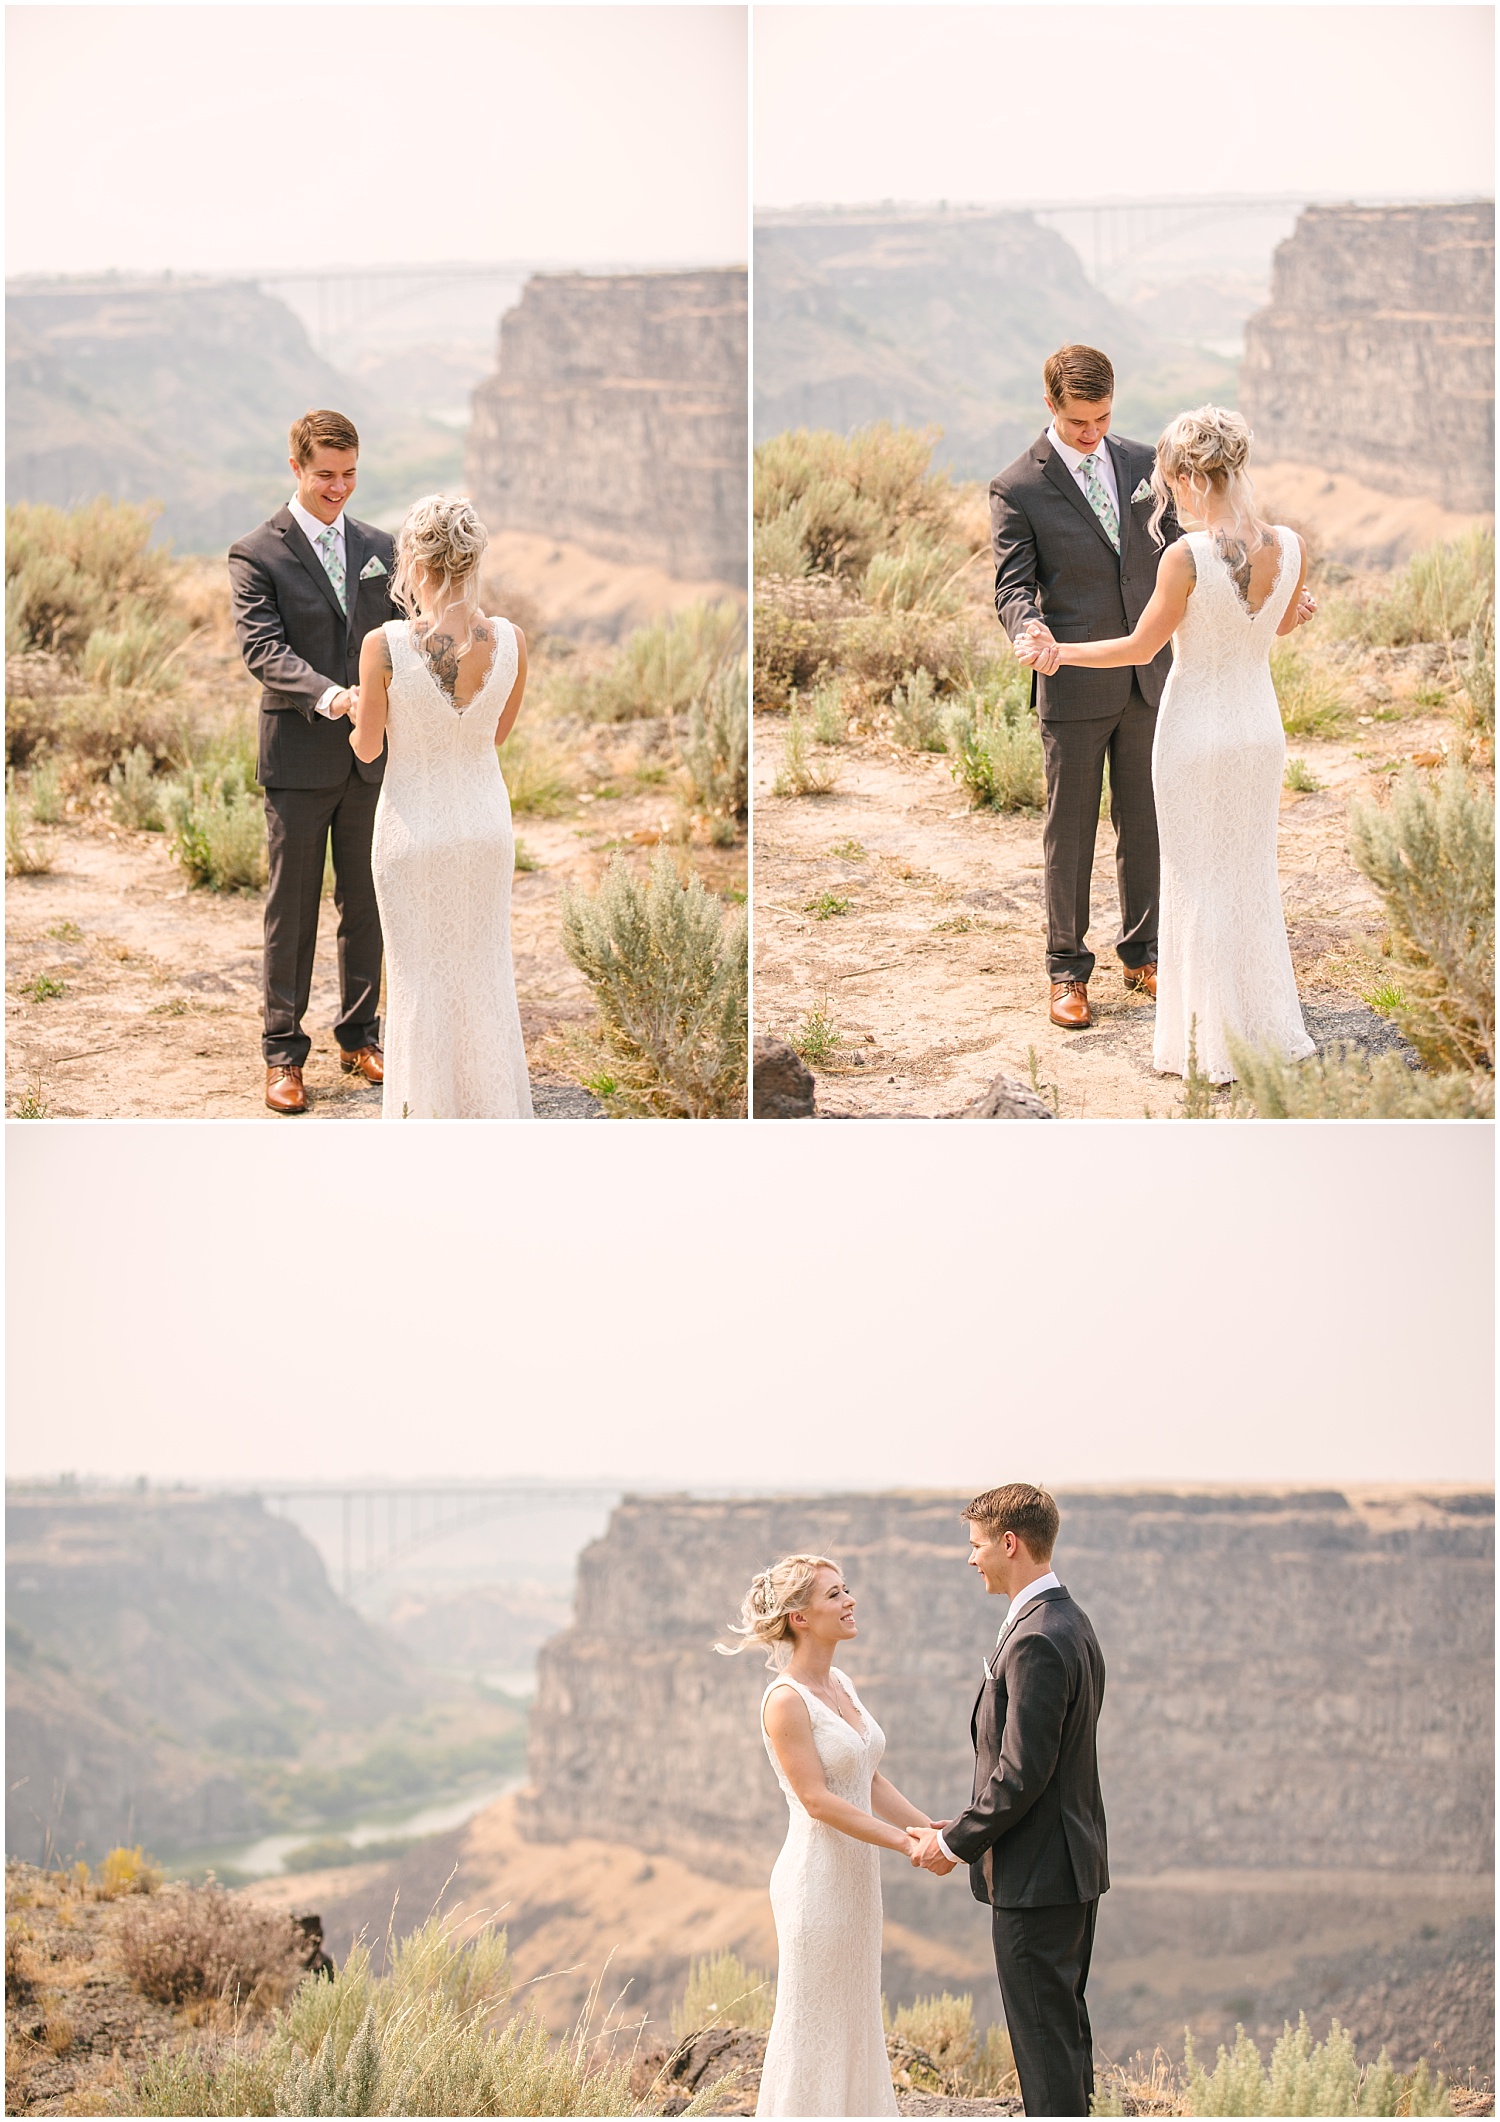 Twin Falls Idaho wedding photos overlooking Snake River Canyon